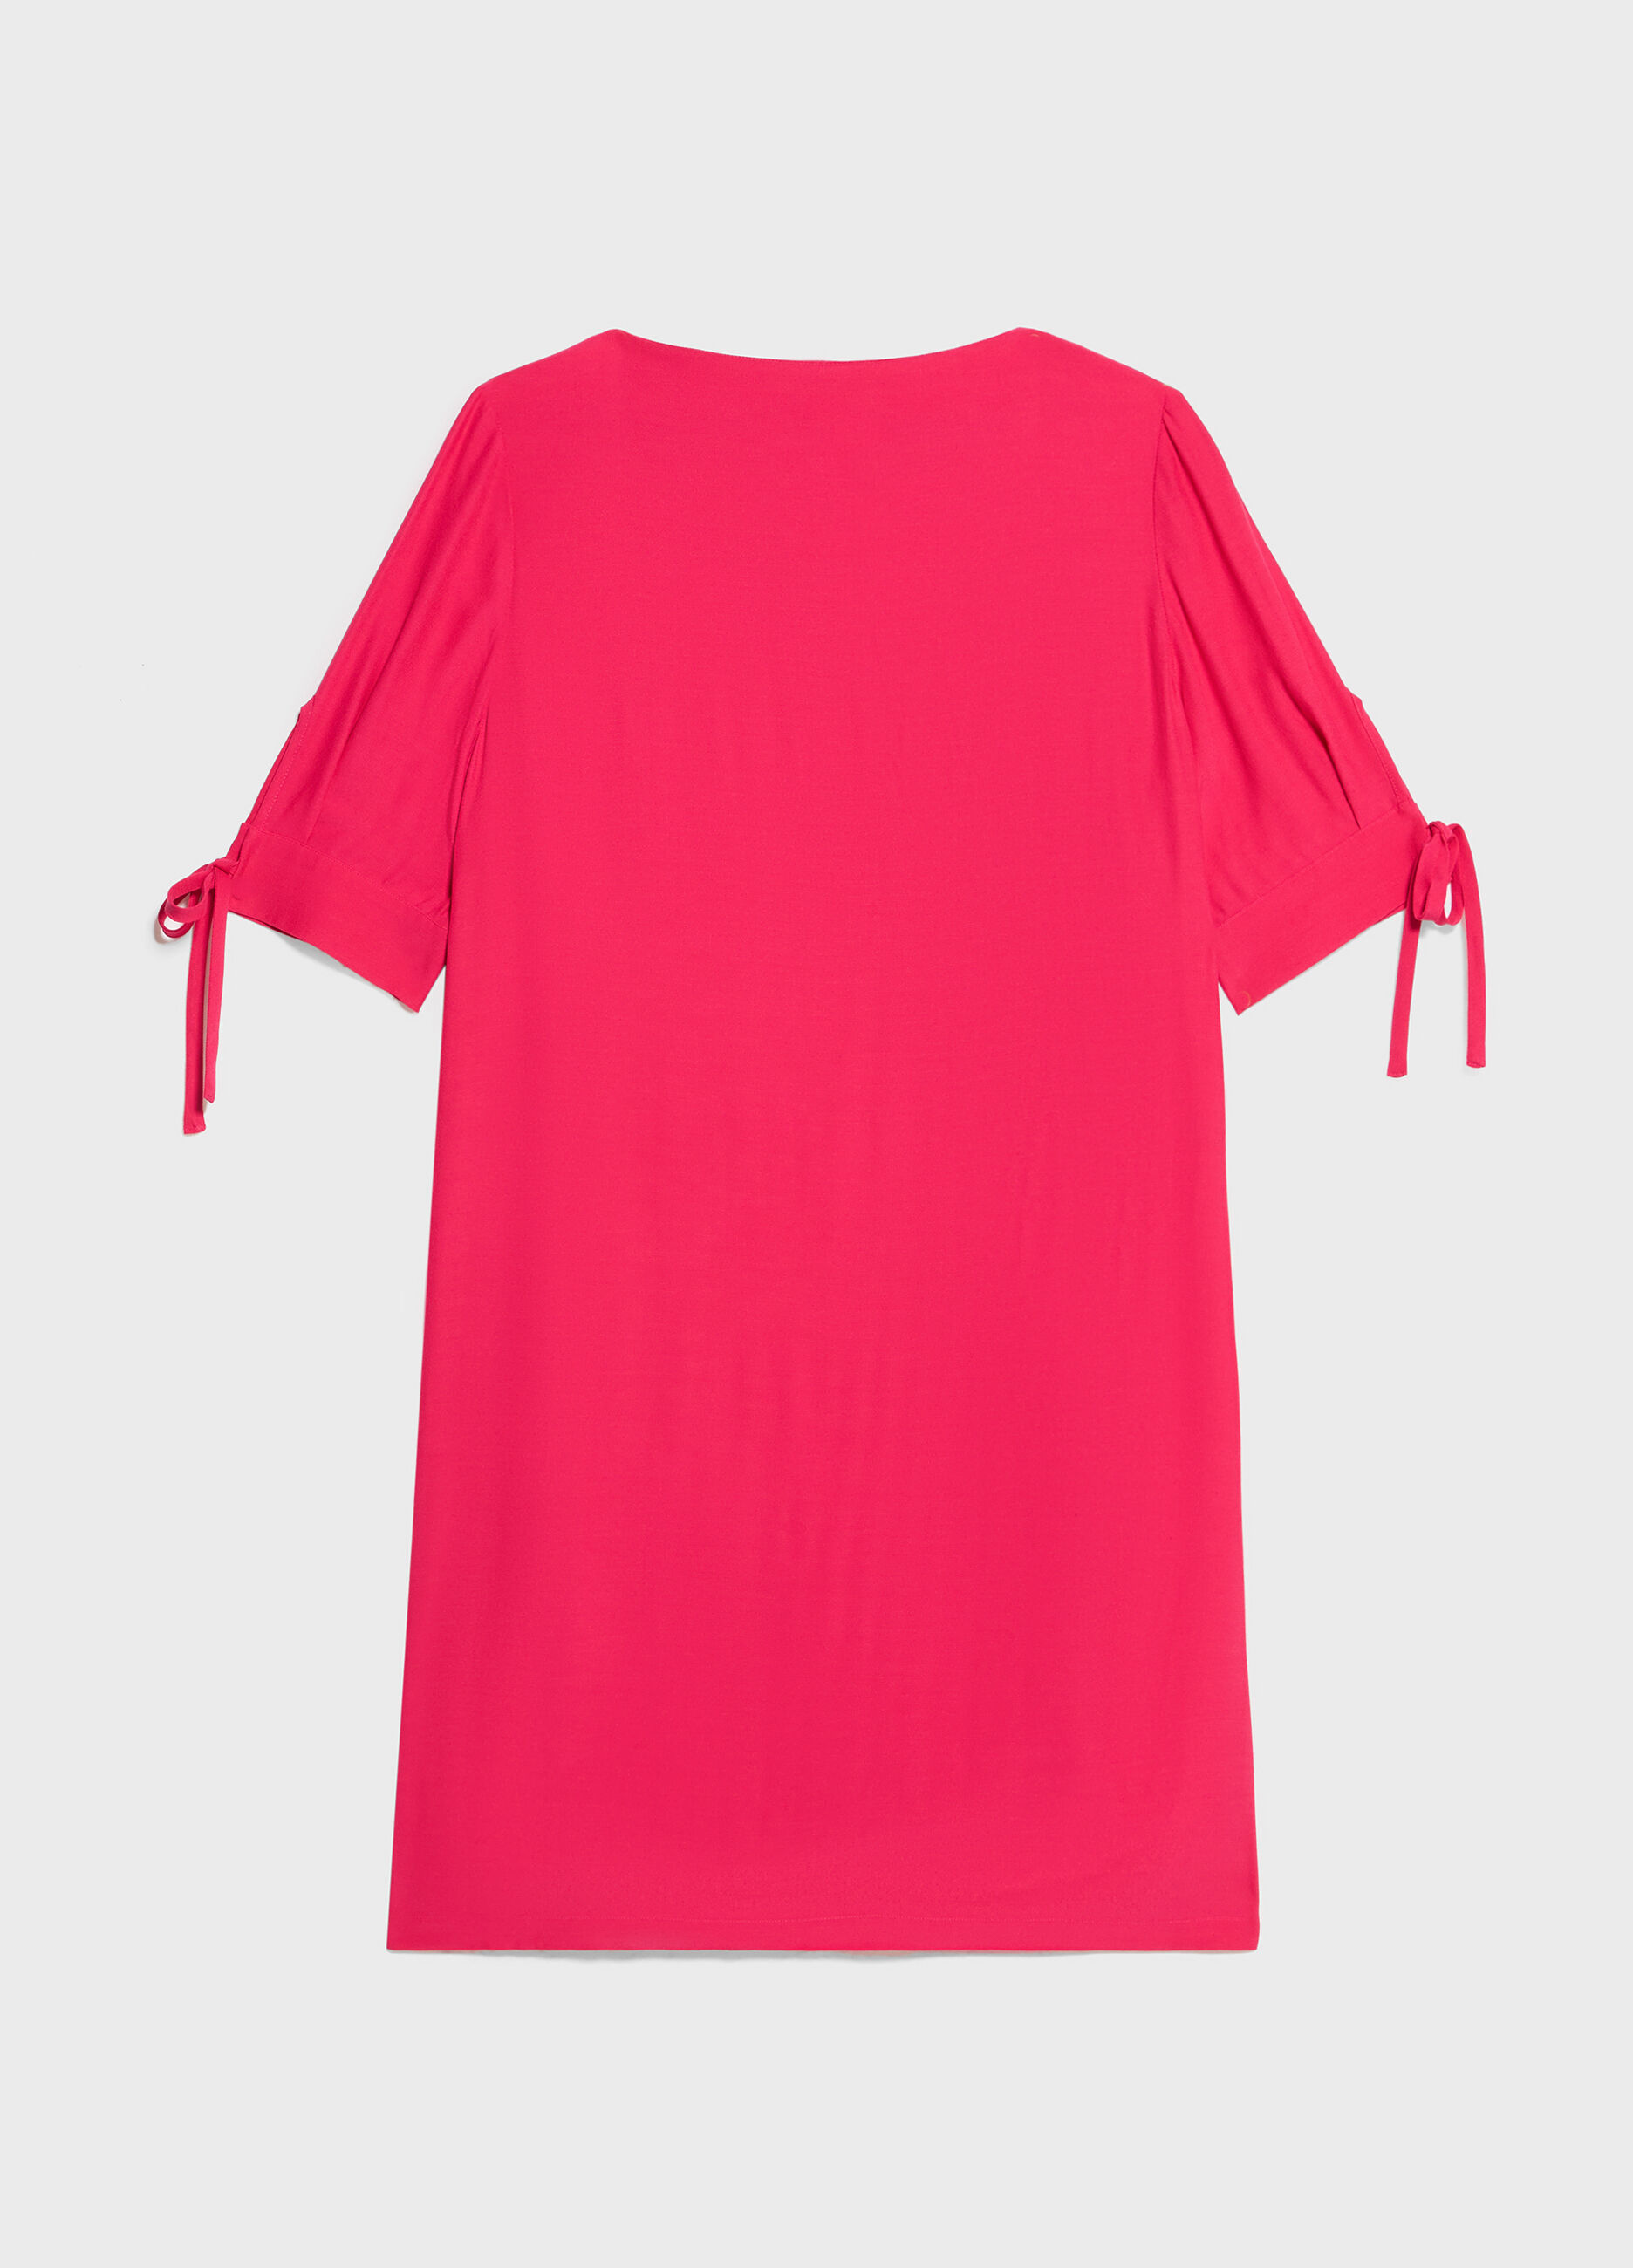 Short pink cady dress